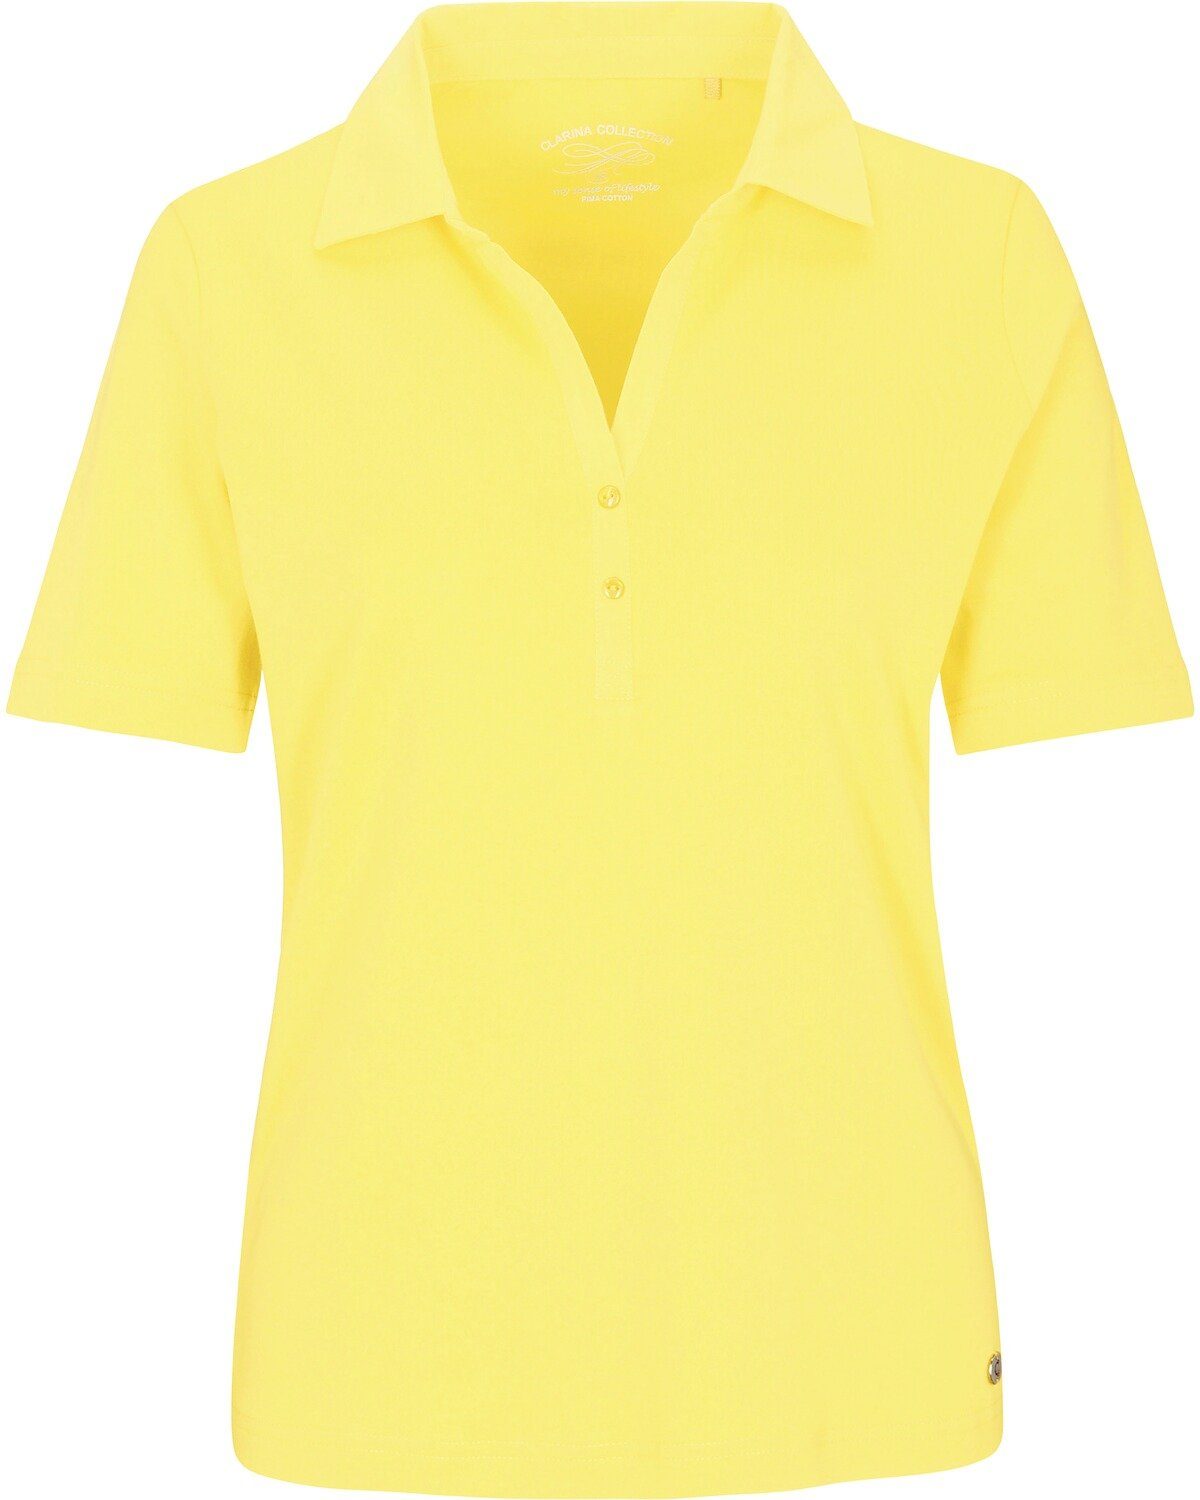 Clarina Poloshirt Poloshirt Gelb